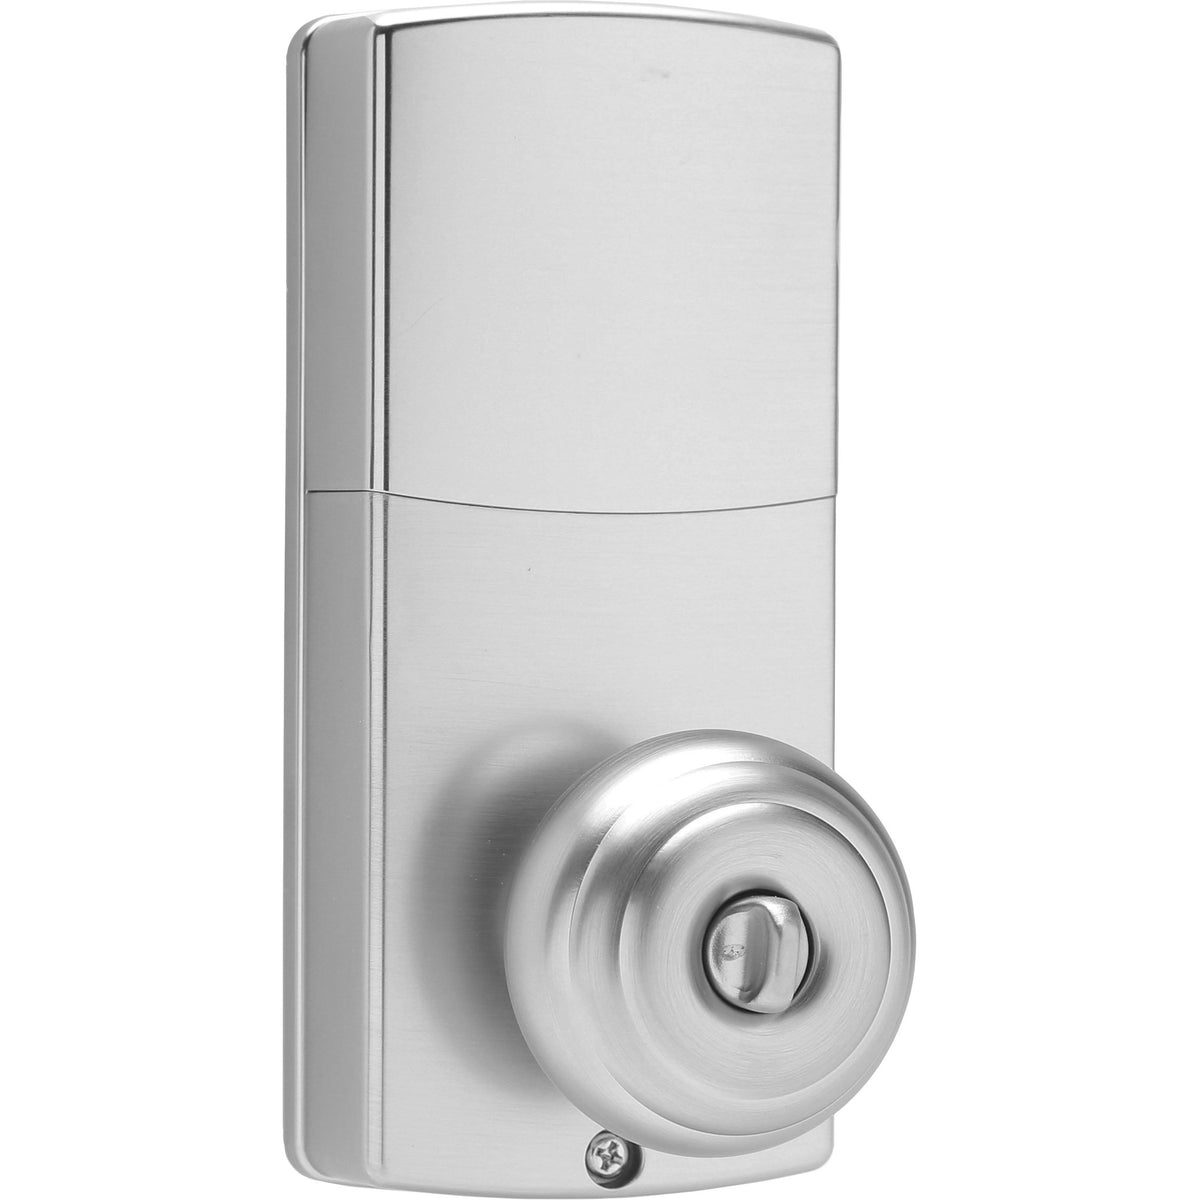 Honeywell 8732301L Electronic Entry Knob Door Lock with Keypad in Satin Nickel Backside